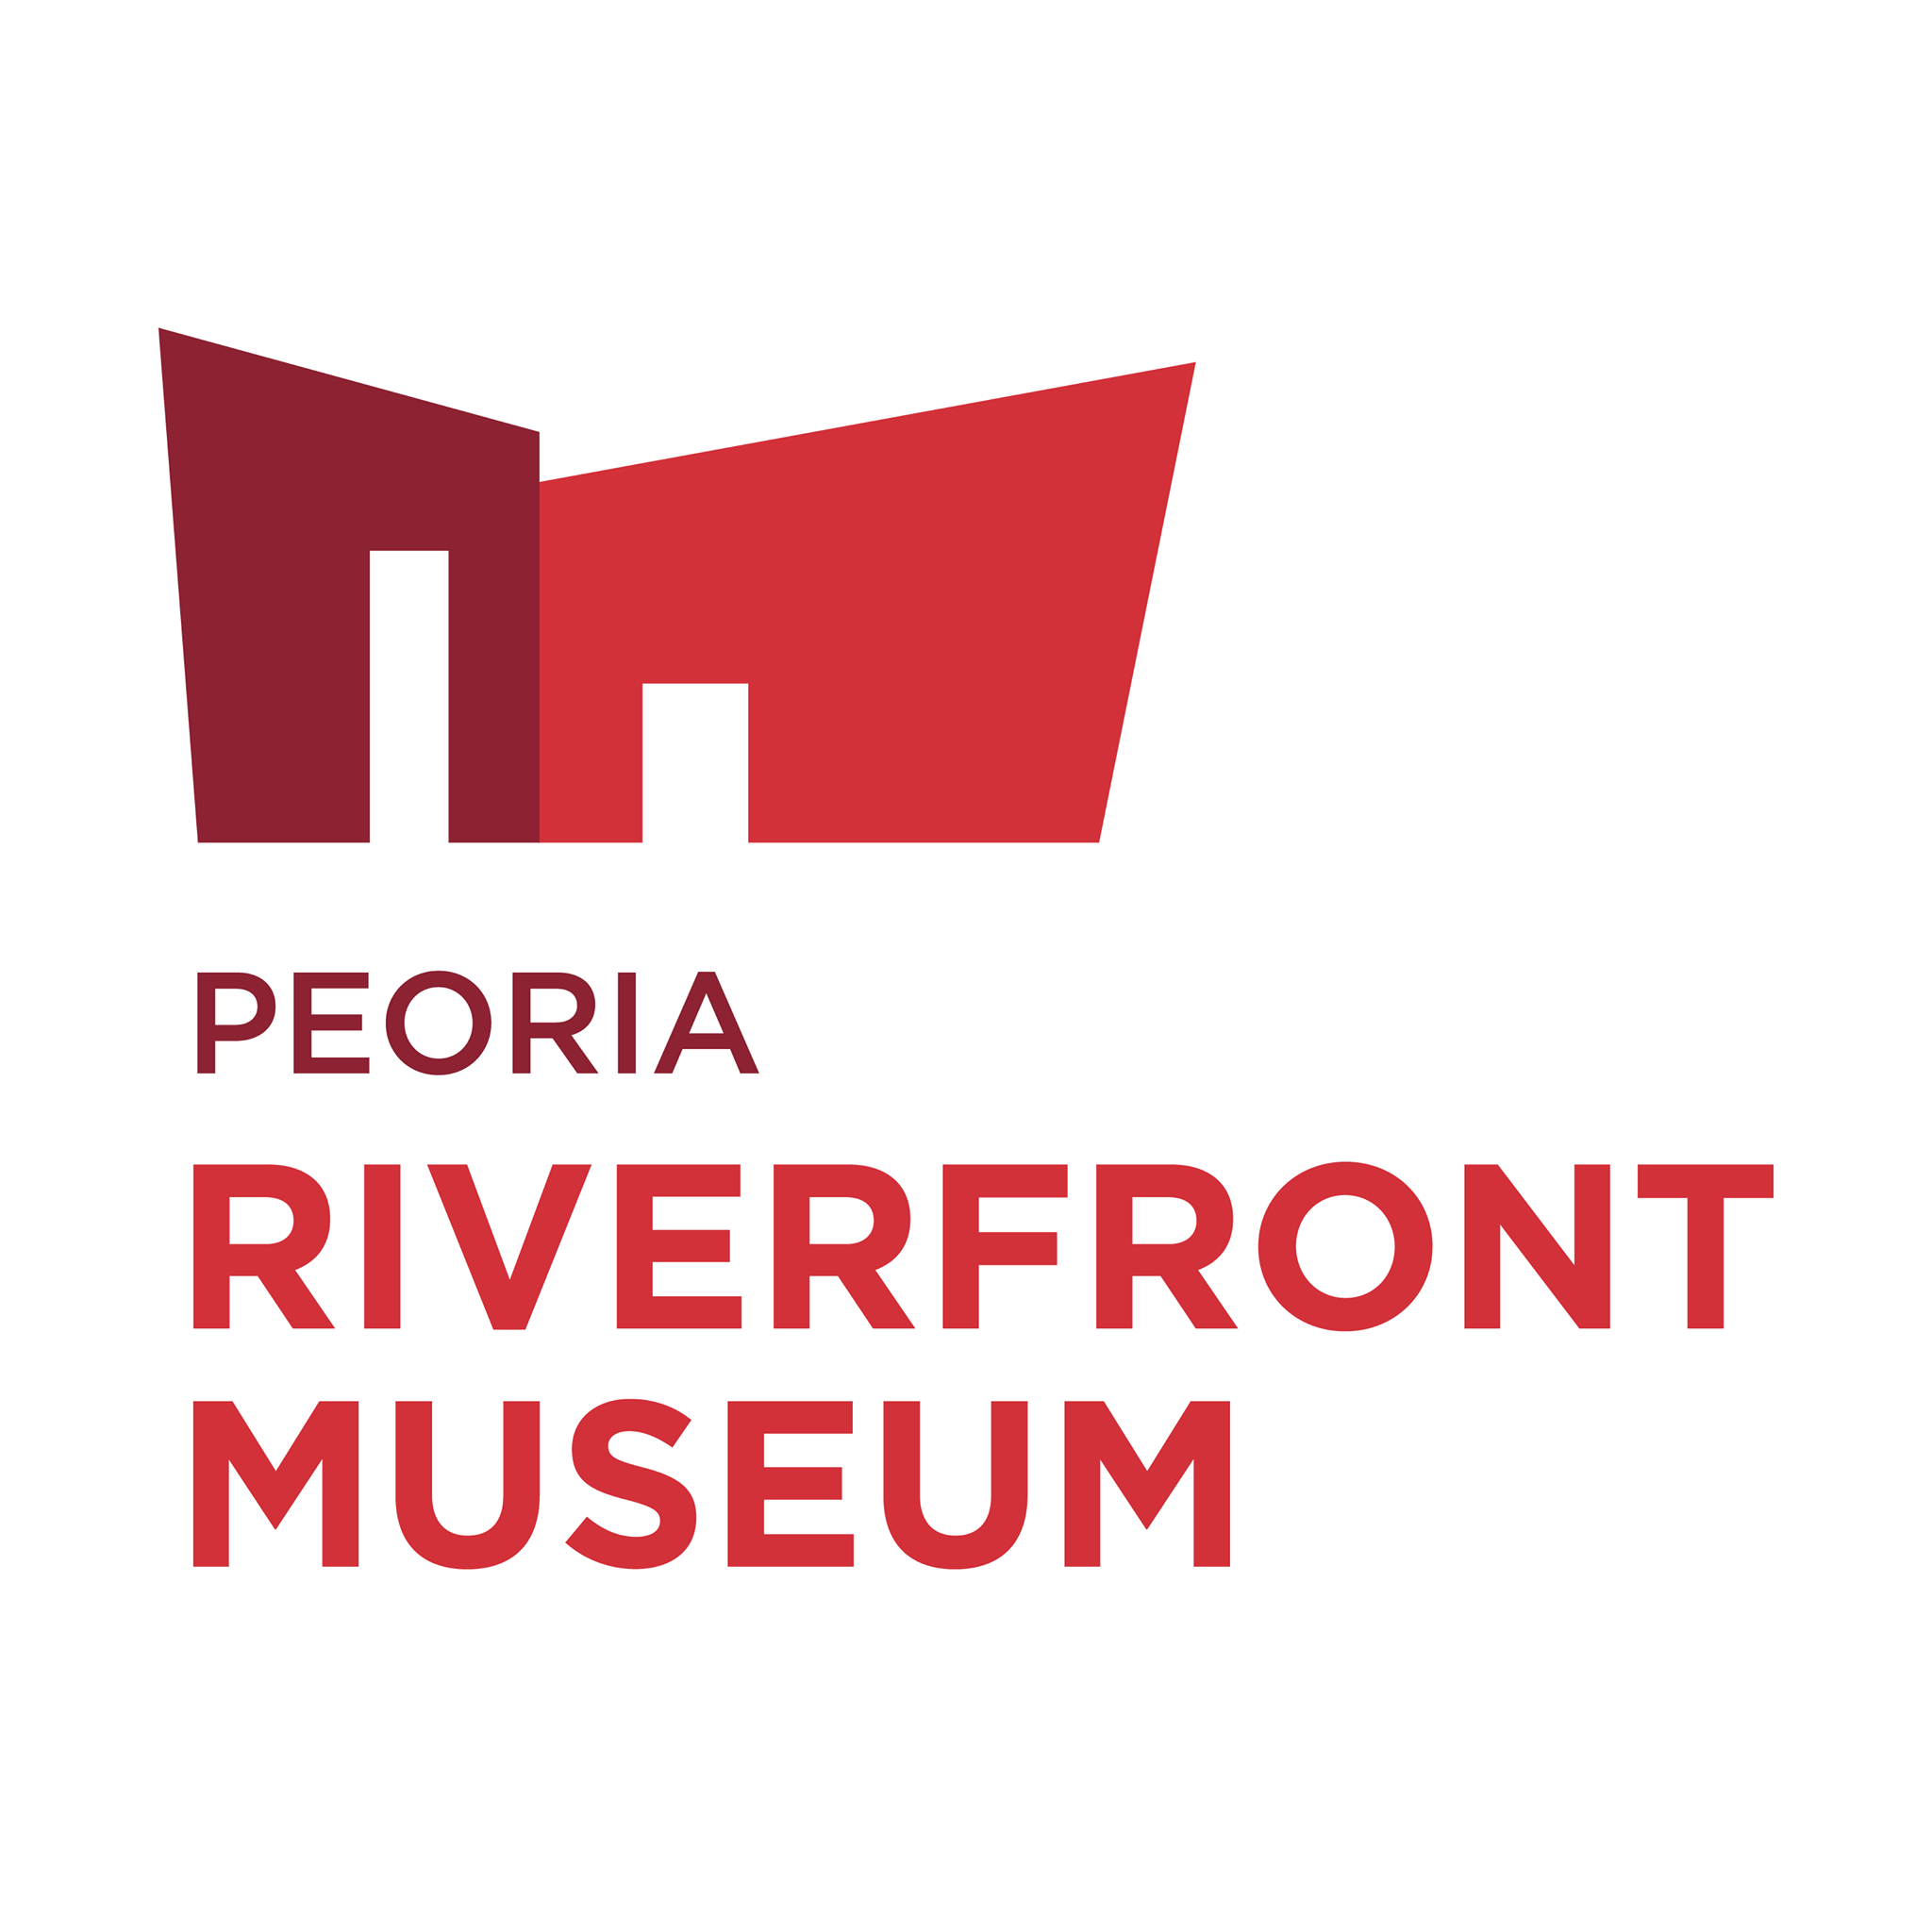 Peoria Riverfront Museum|Museums|Travel